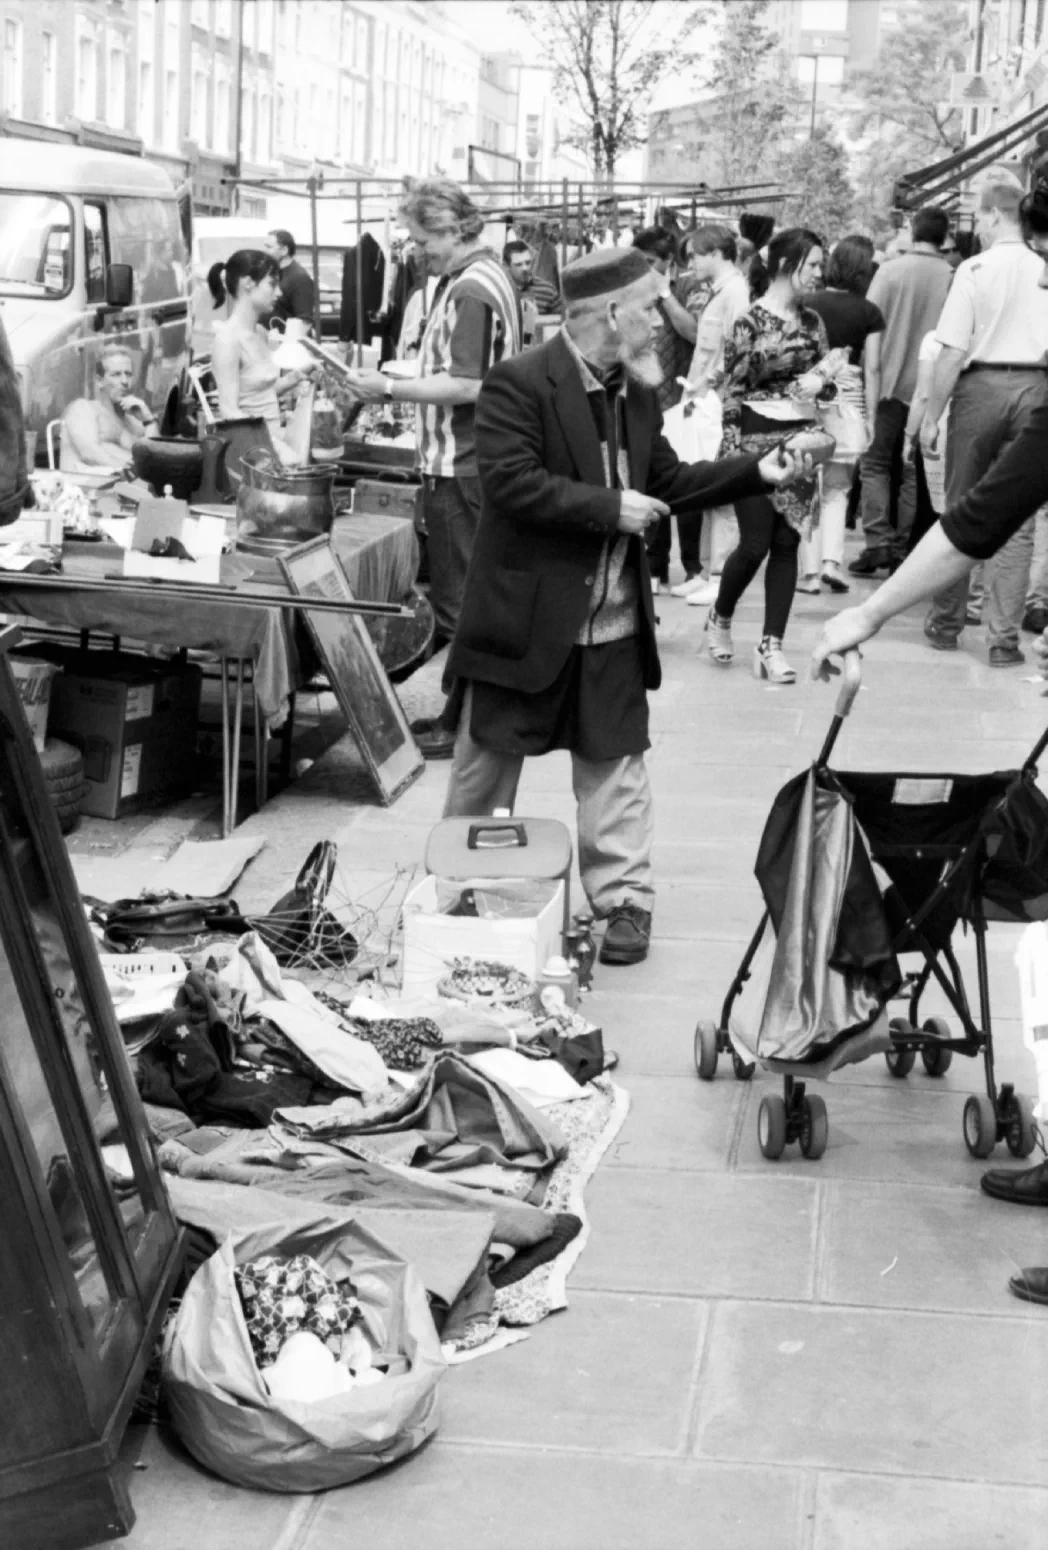 Look at this. Portobello Market, London, England. April 2000